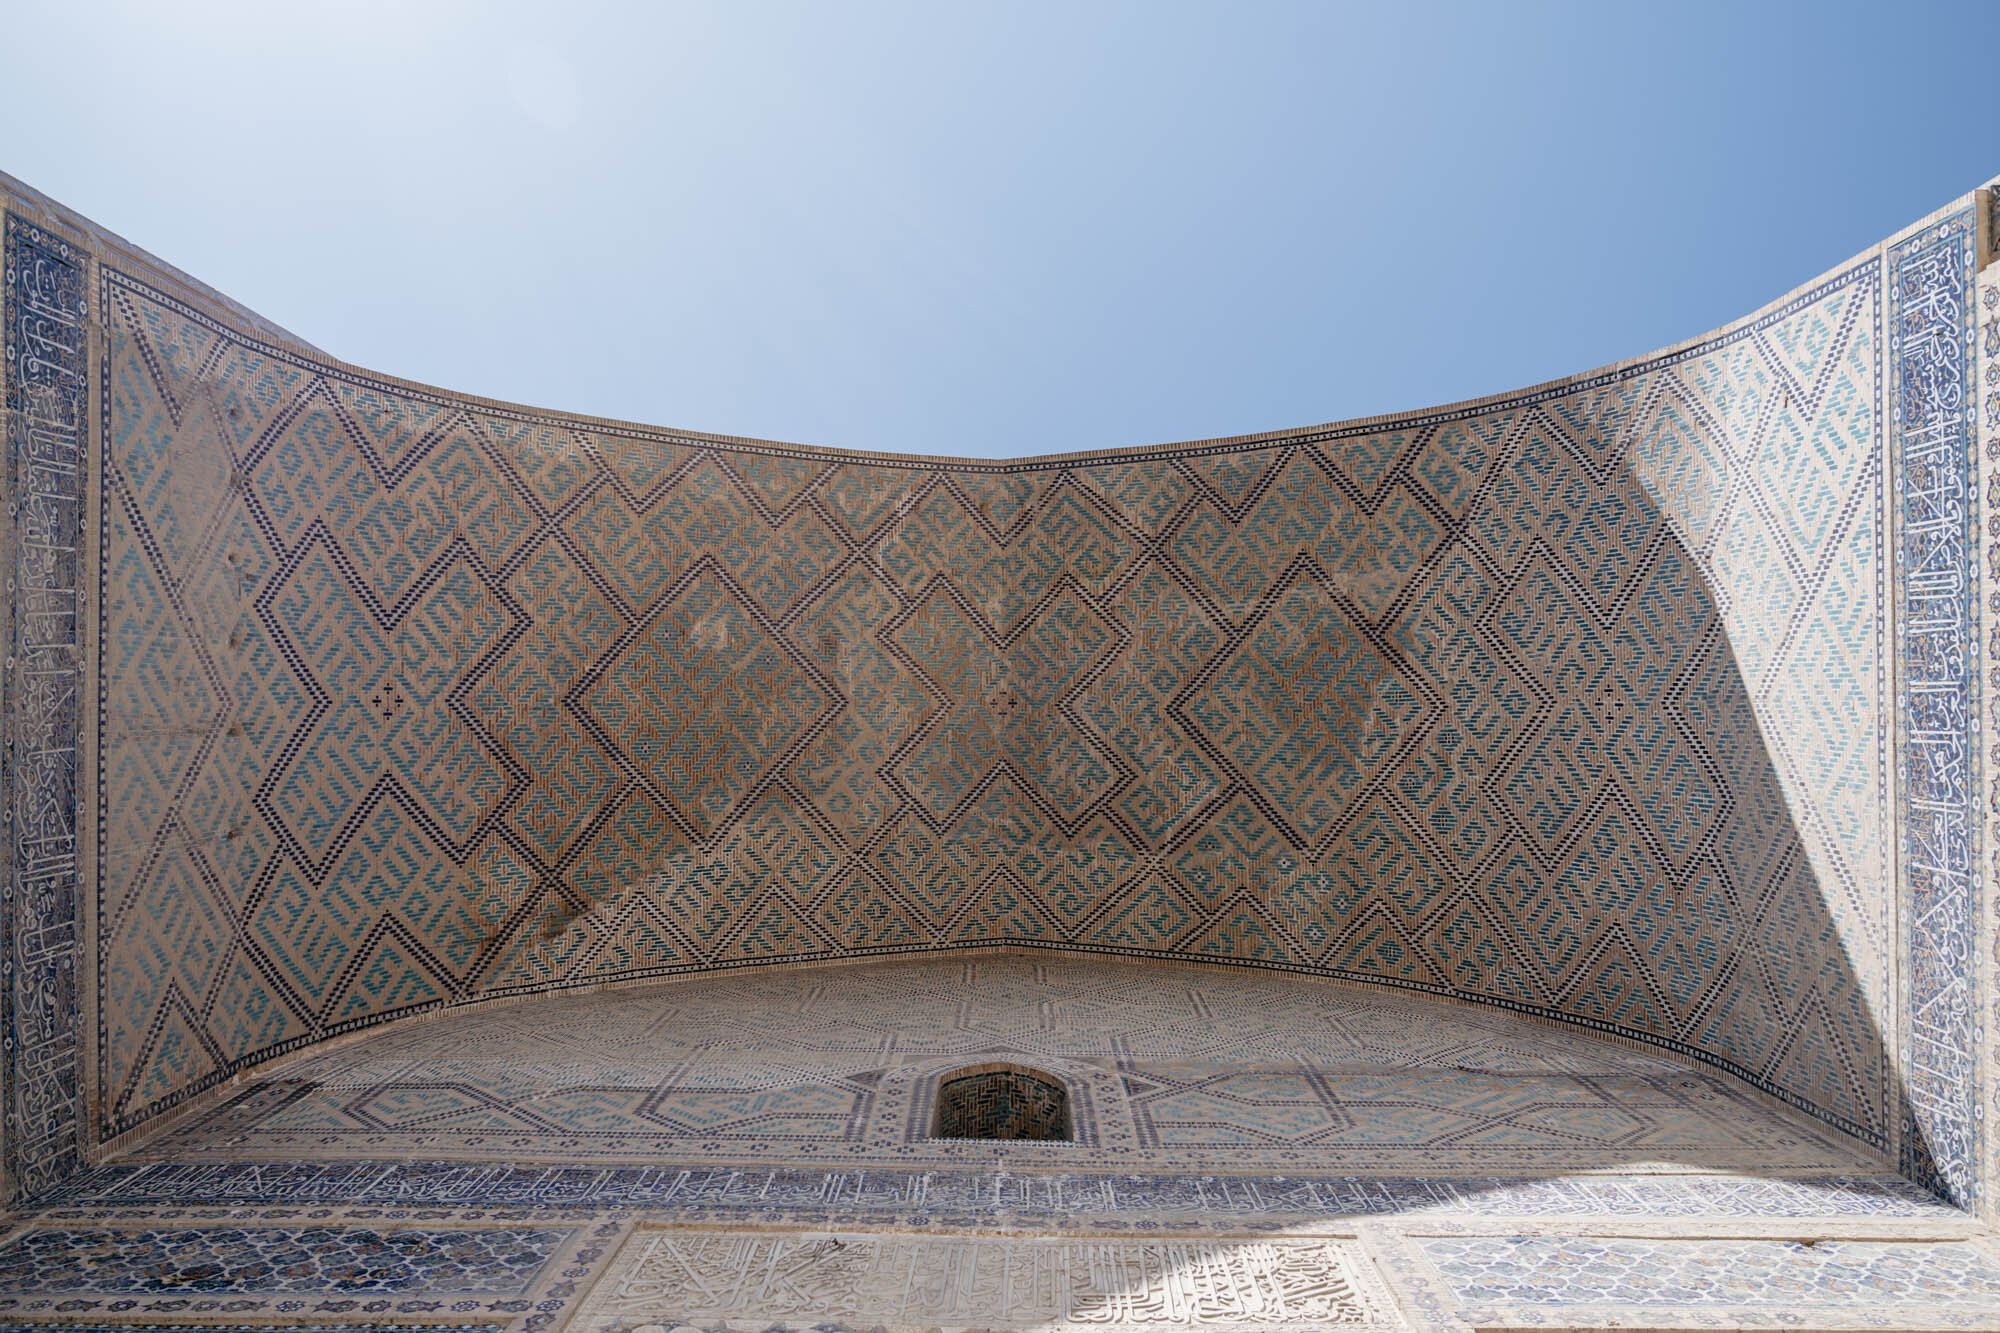  Ceiling details from the Bibi-Khanym Mosque, Samarkand 